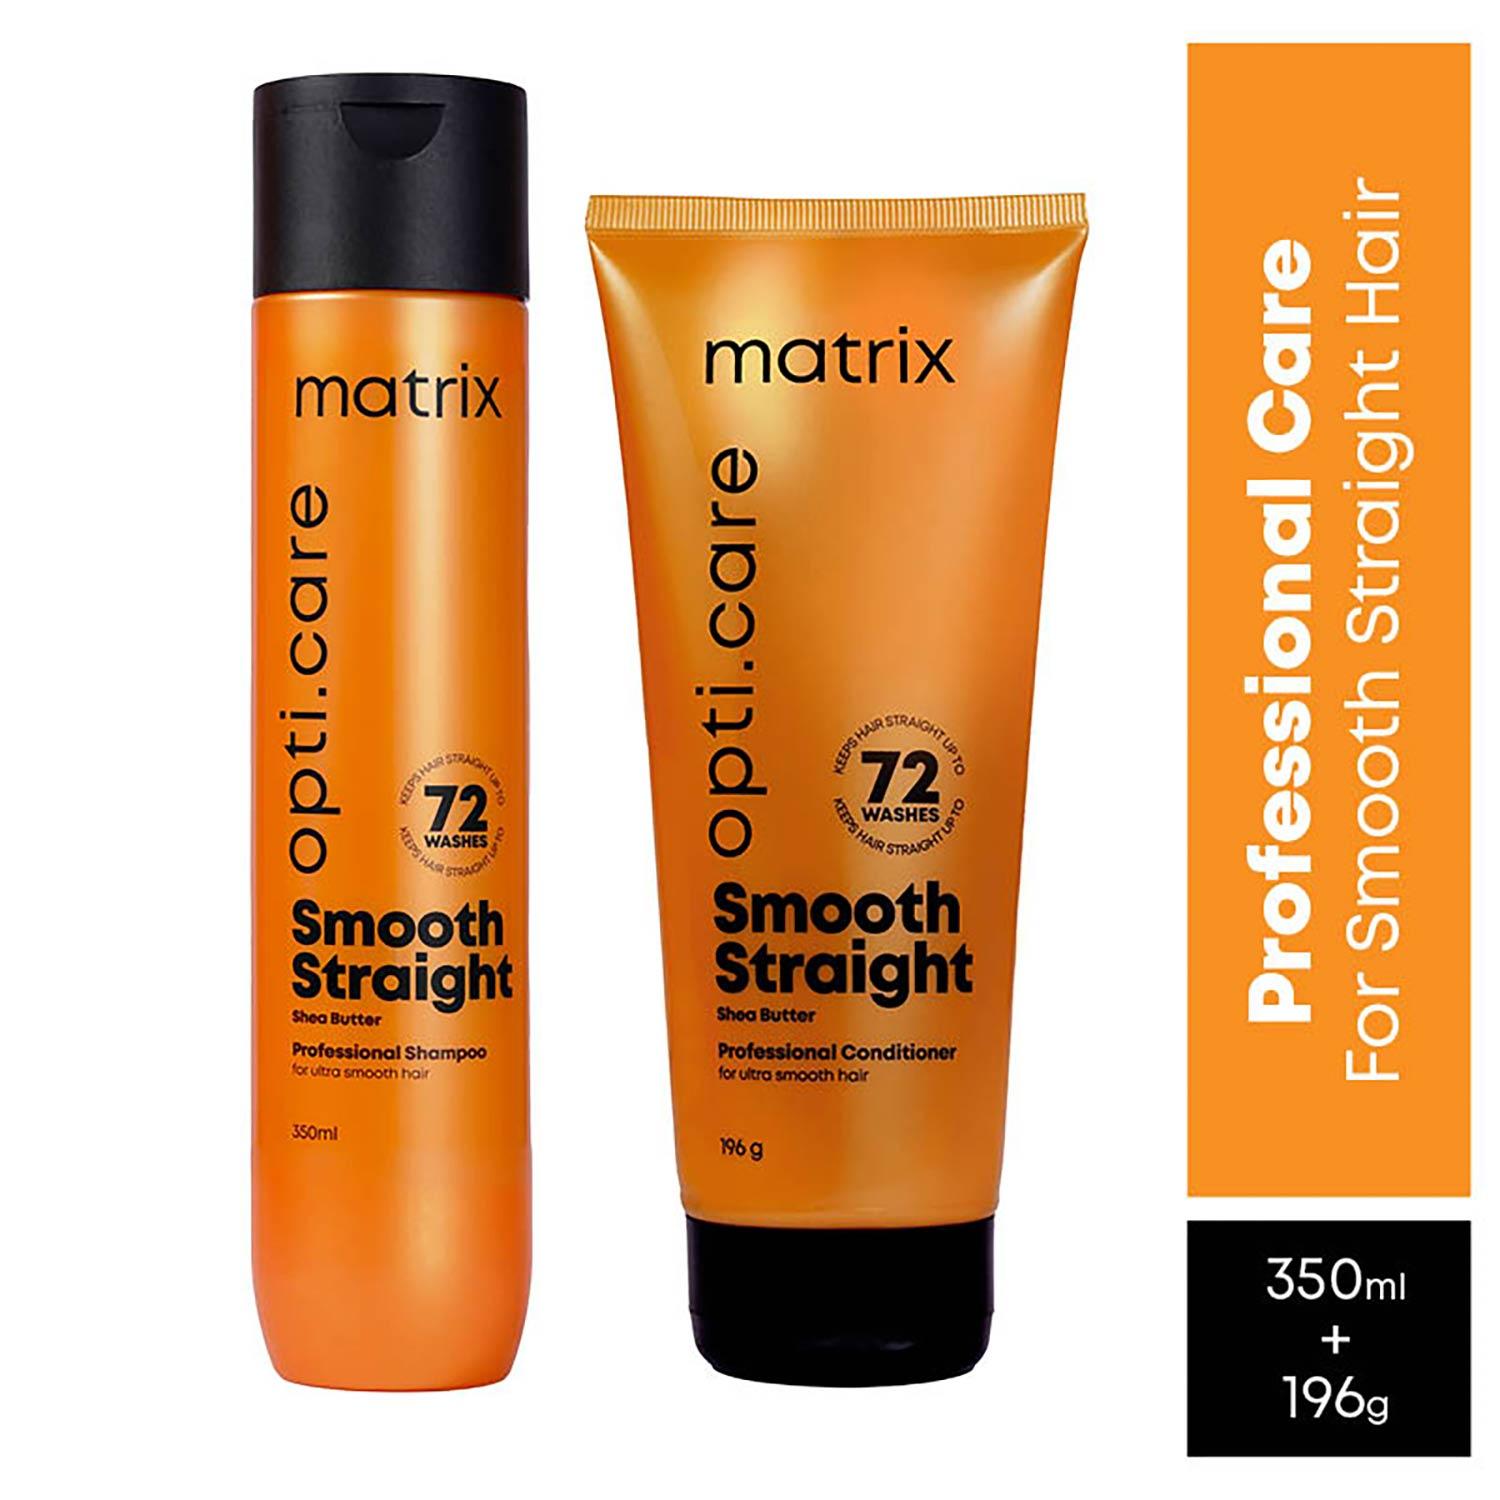 Matrix | Matrix Opti.Care Professional Shampoo and Conditioner for Salon Smooth Hair (350 ml + 196 g) Combo